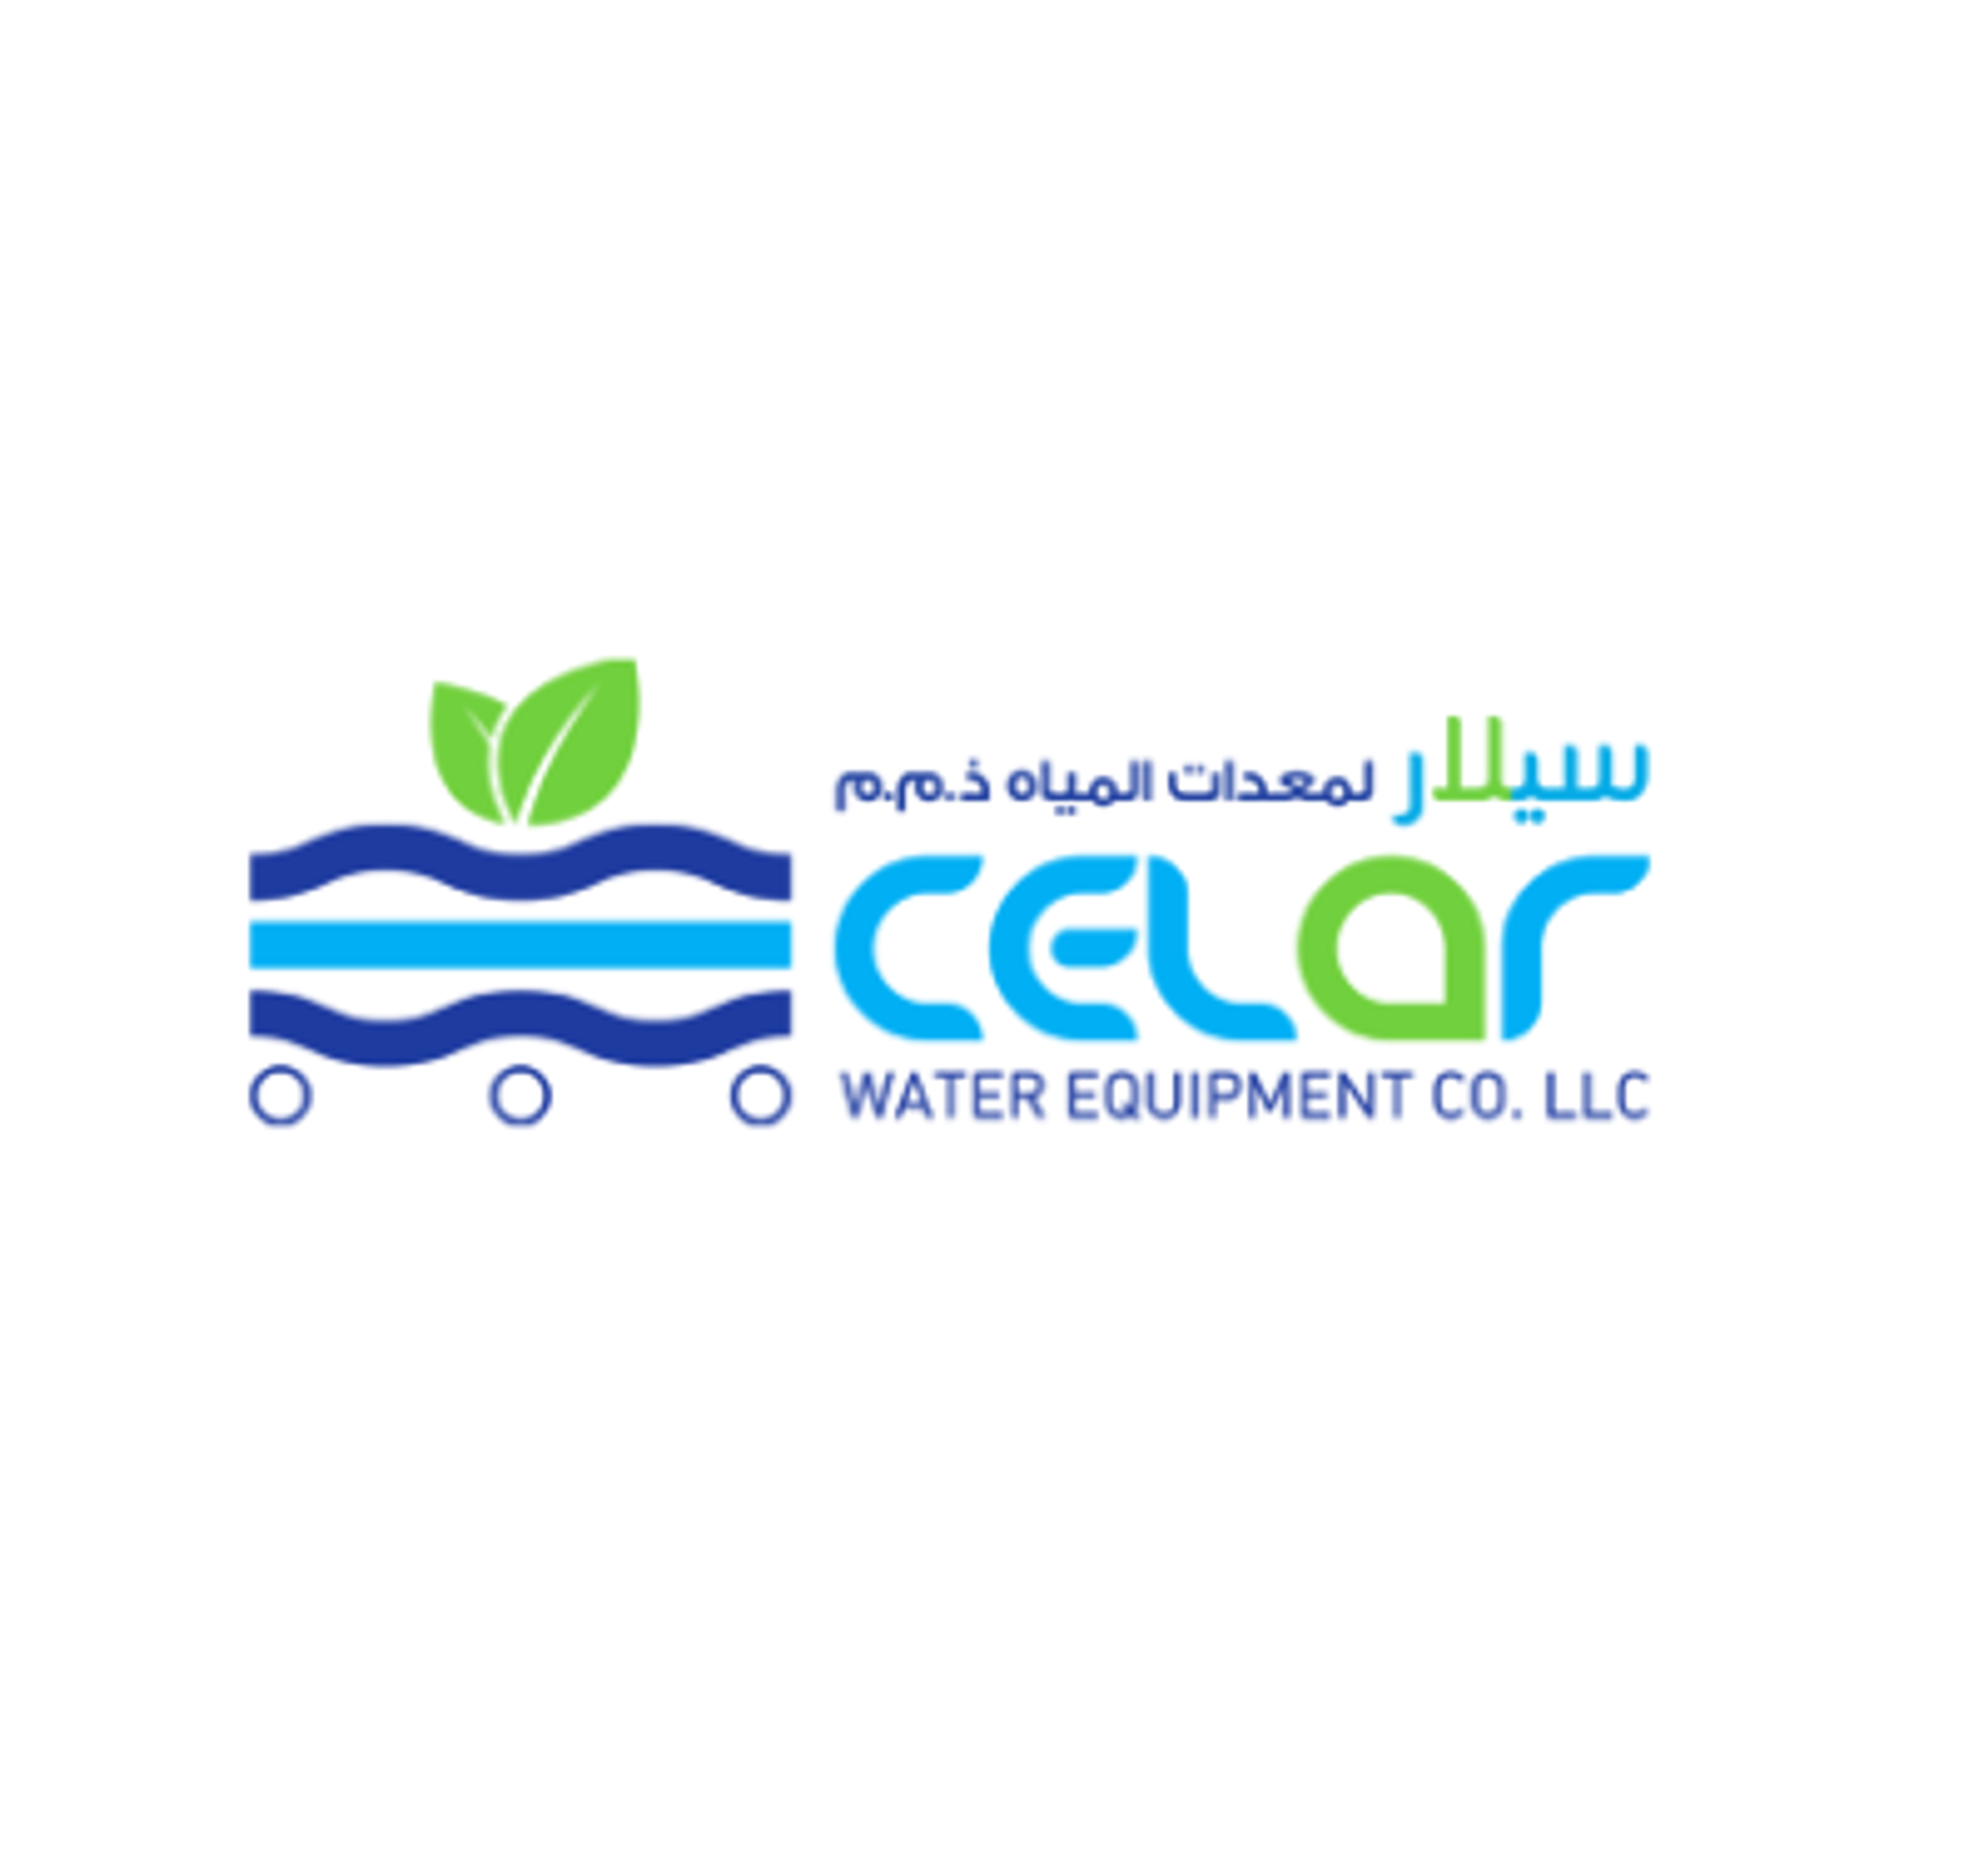 Celar Water Equipment